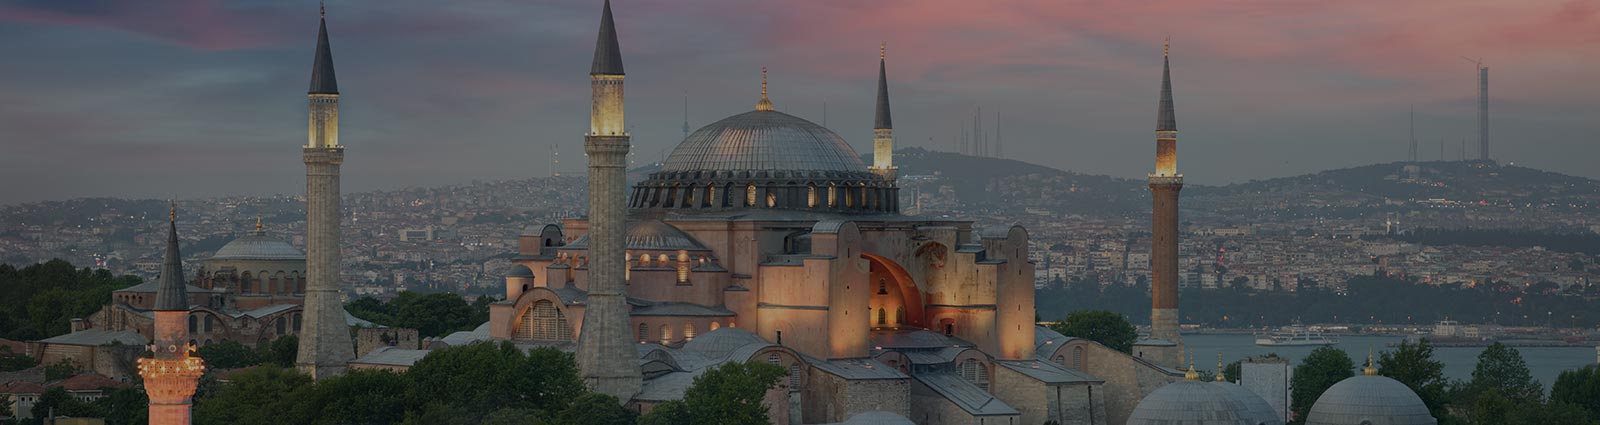 Hagia Sophia at Dusk in Istanbul